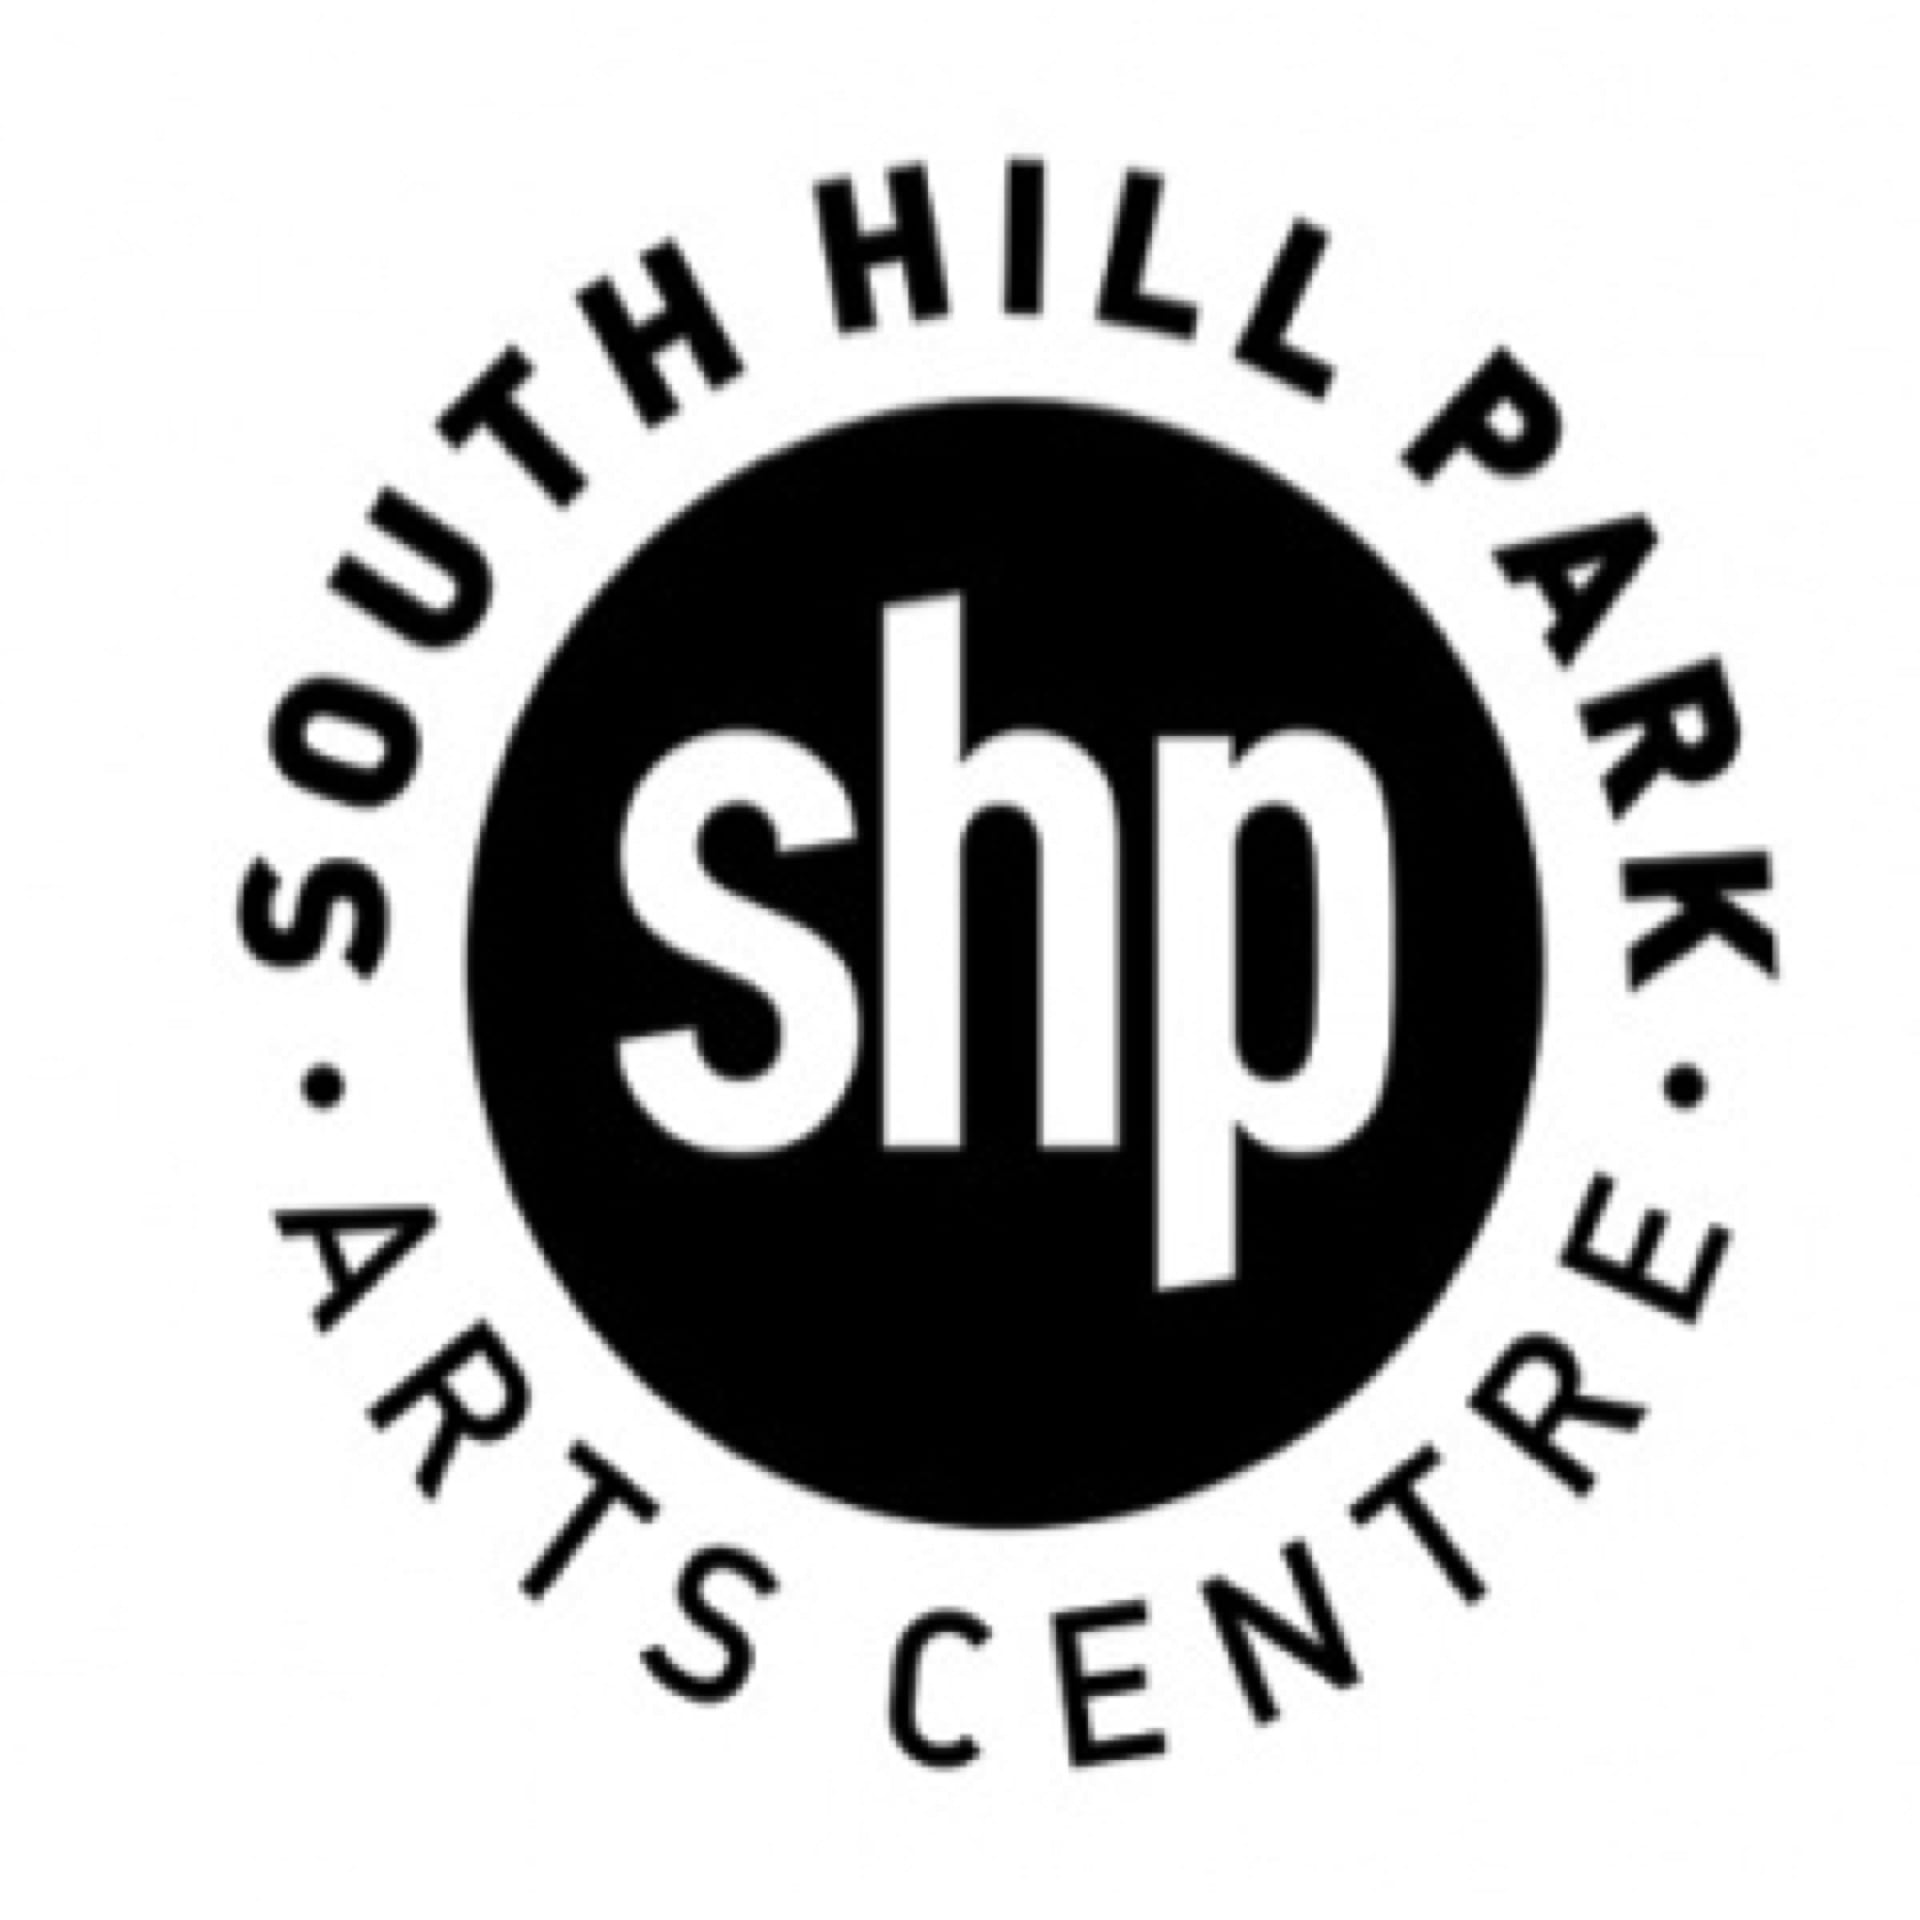 South Hill Park